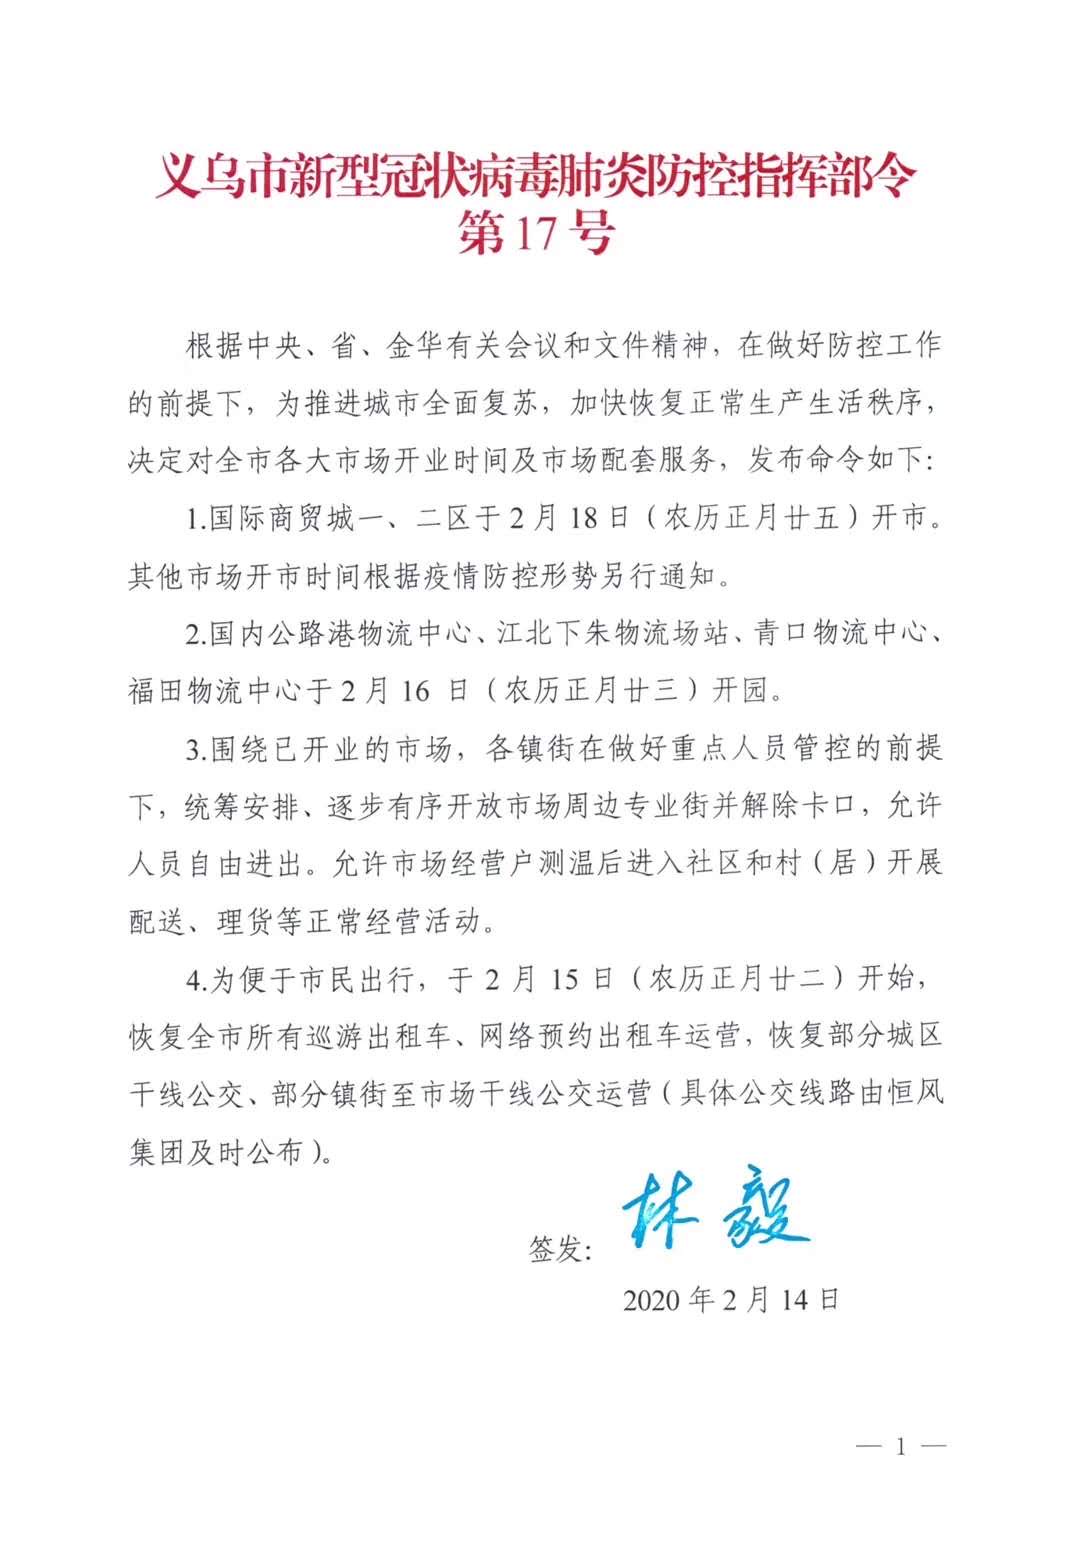 Yiwu Market (District 1&2) Will Be Open On Feb. 18 After Coronavirus